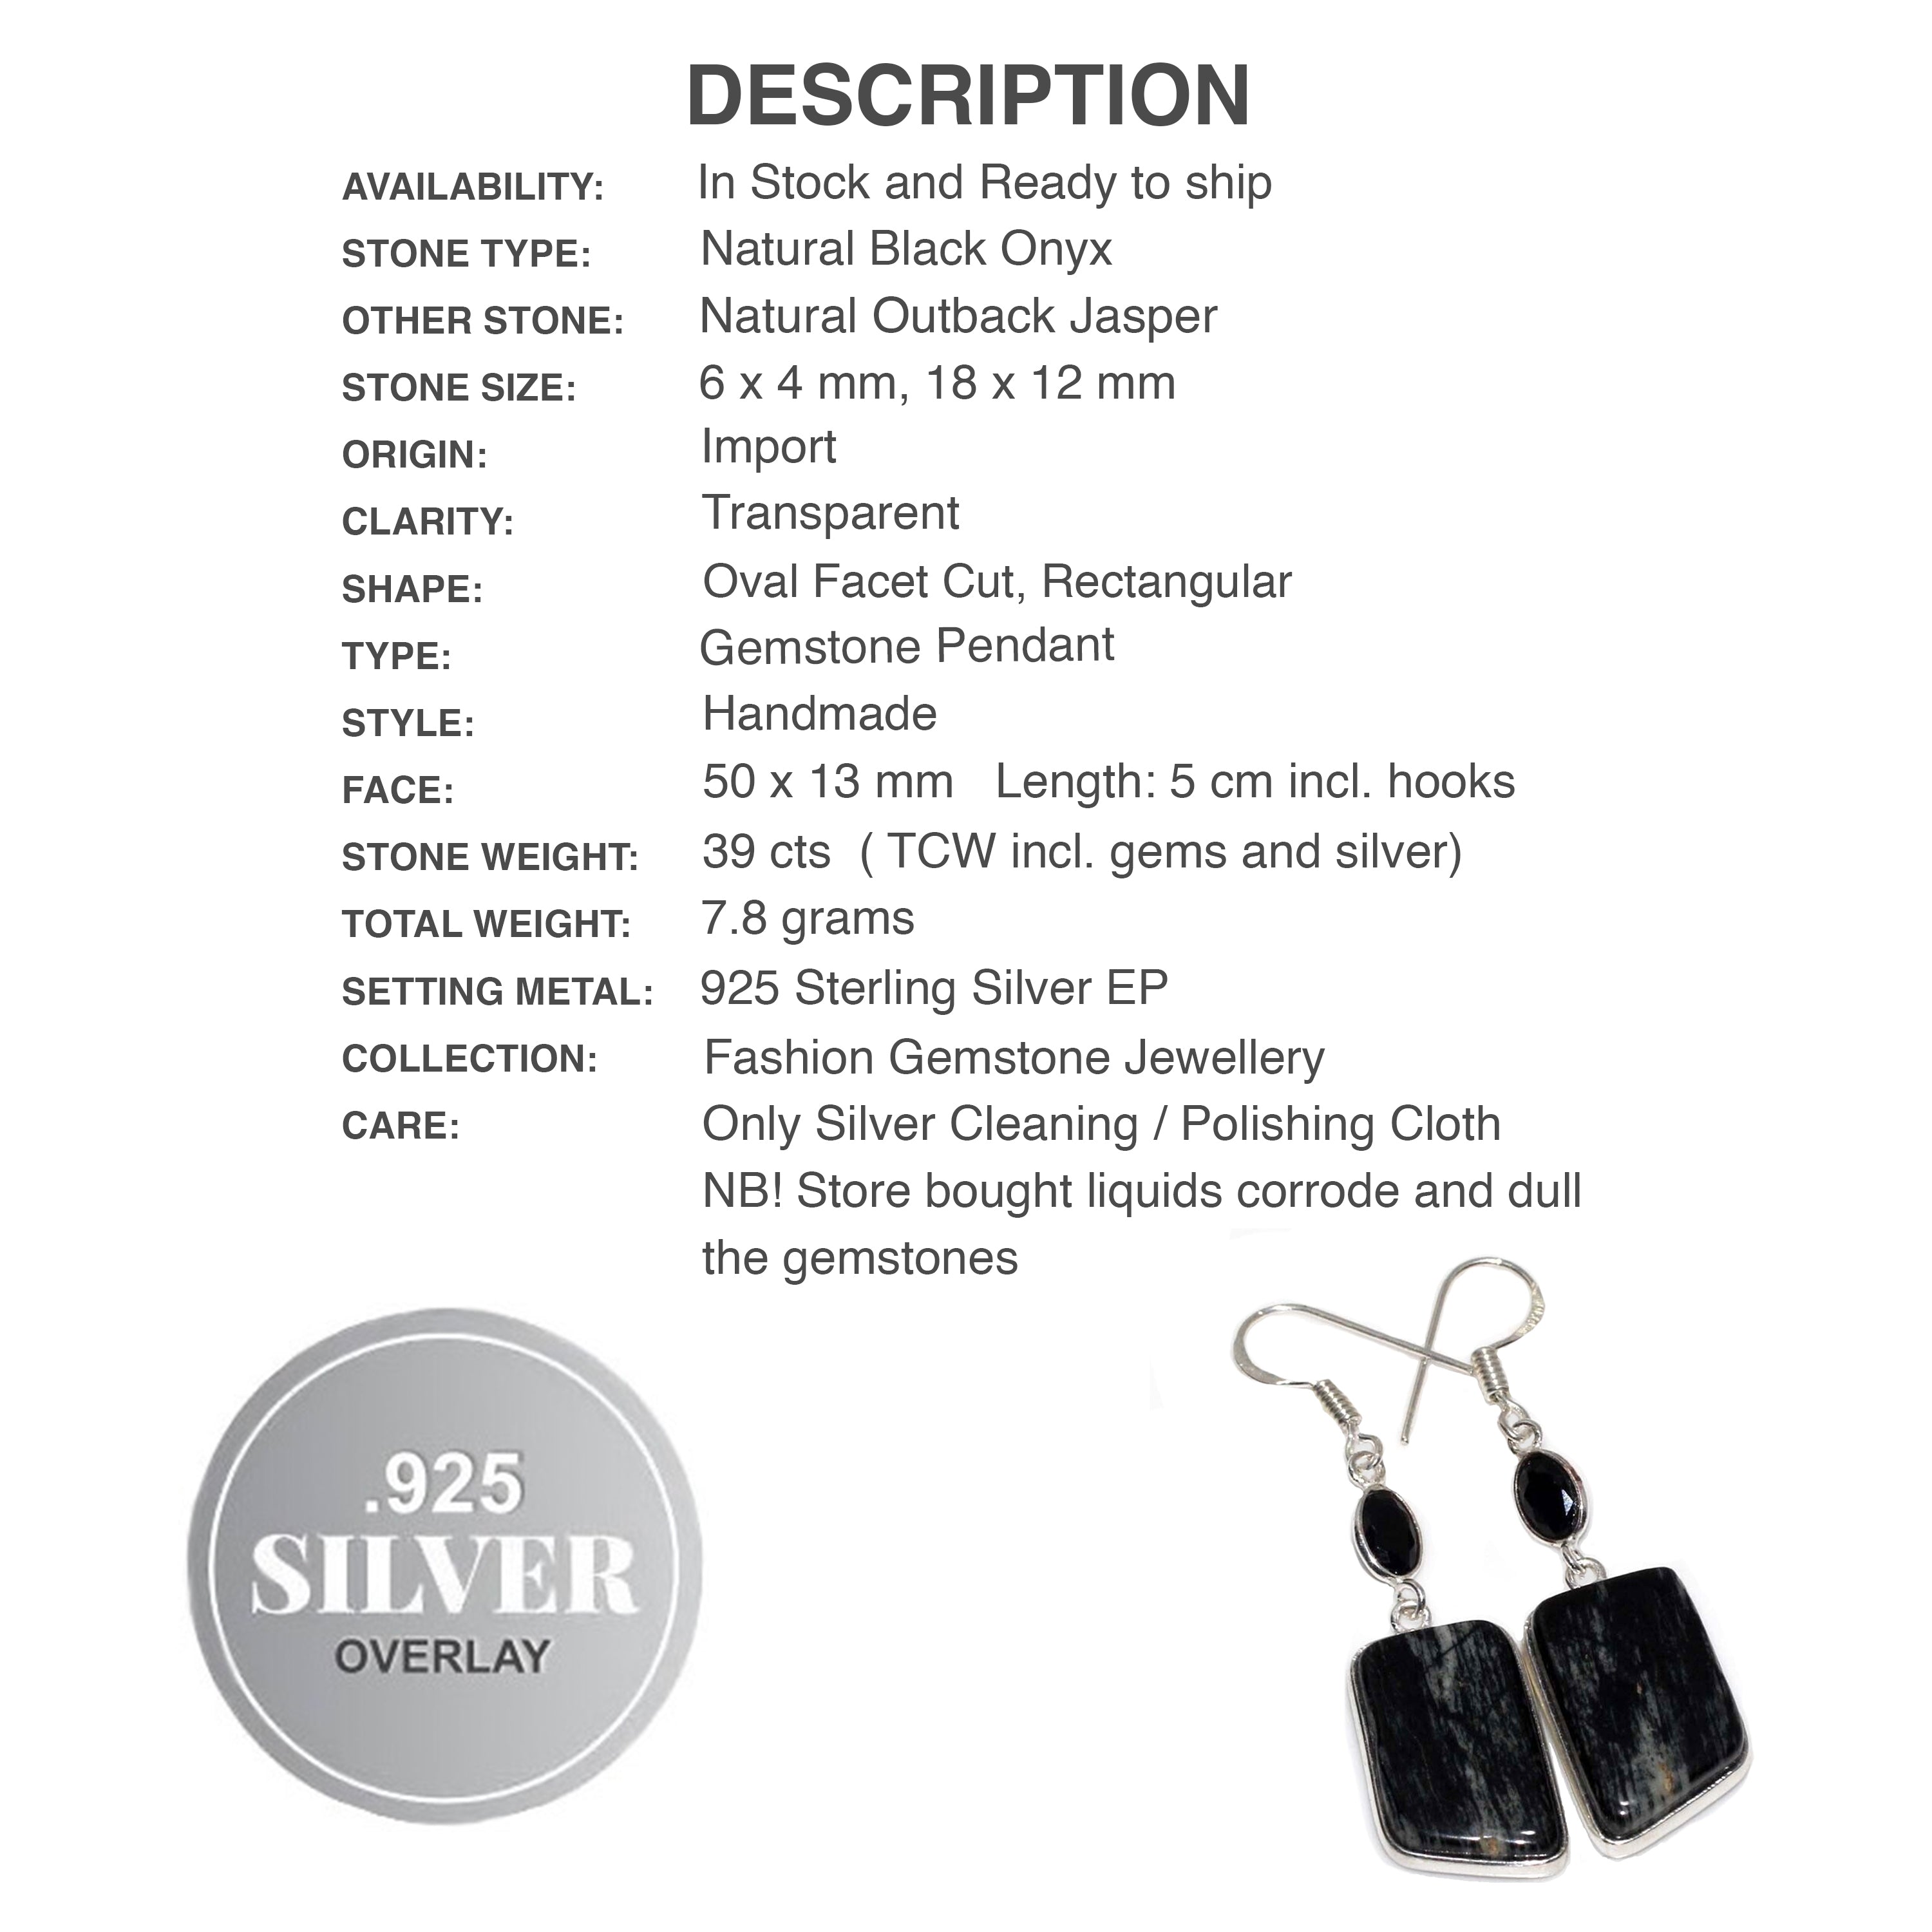 Natural Outback Jasper and Black Onyx Gemstone .925 Sterling Silver Earrings